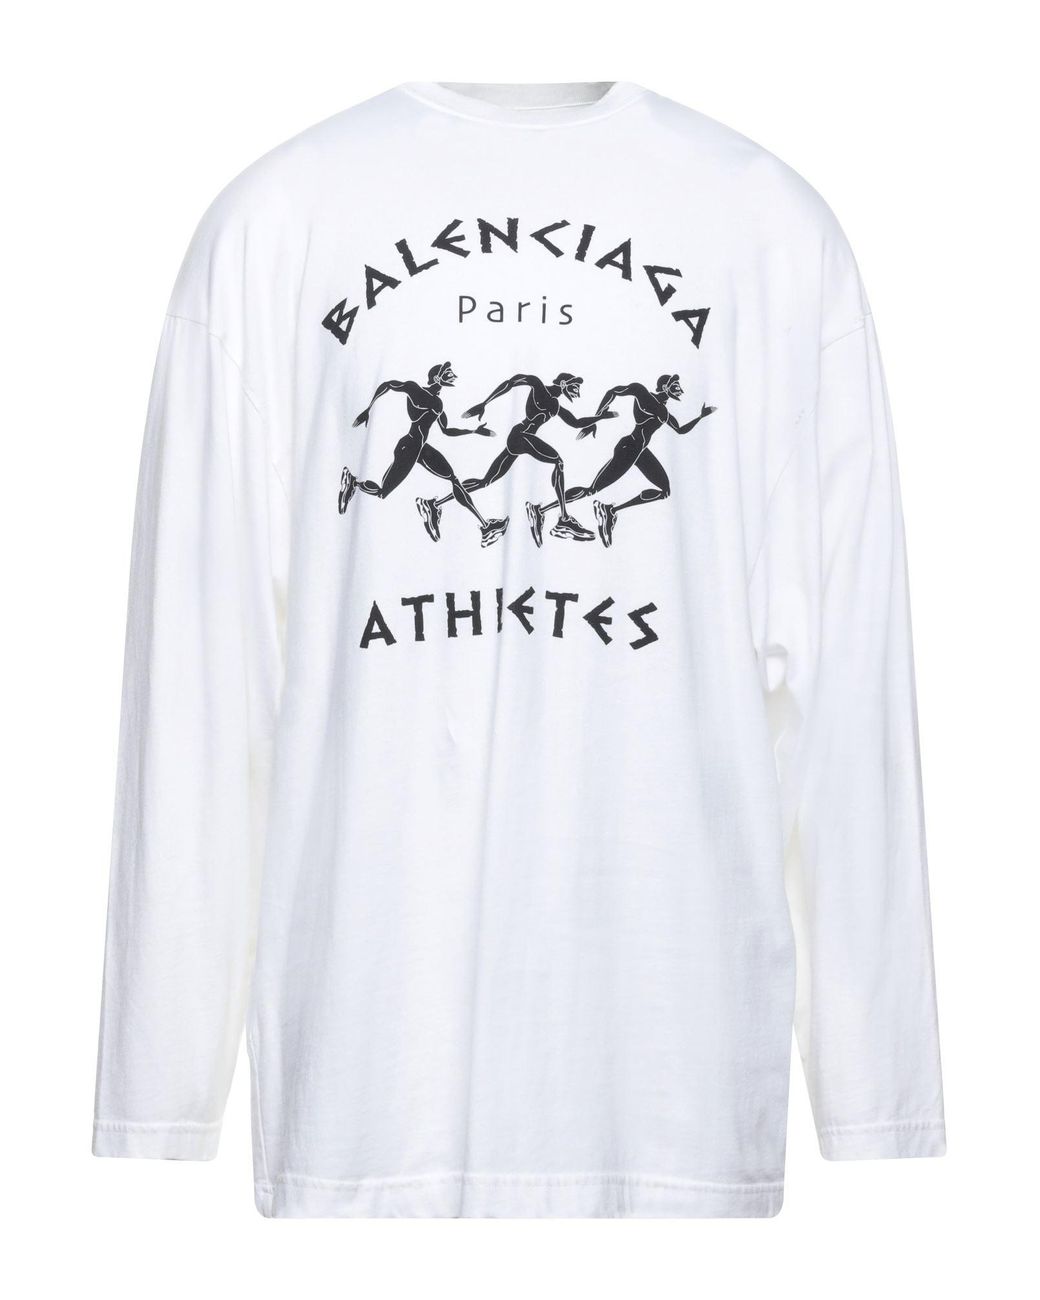 Balenciaga T-shirt in White for Men | Lyst